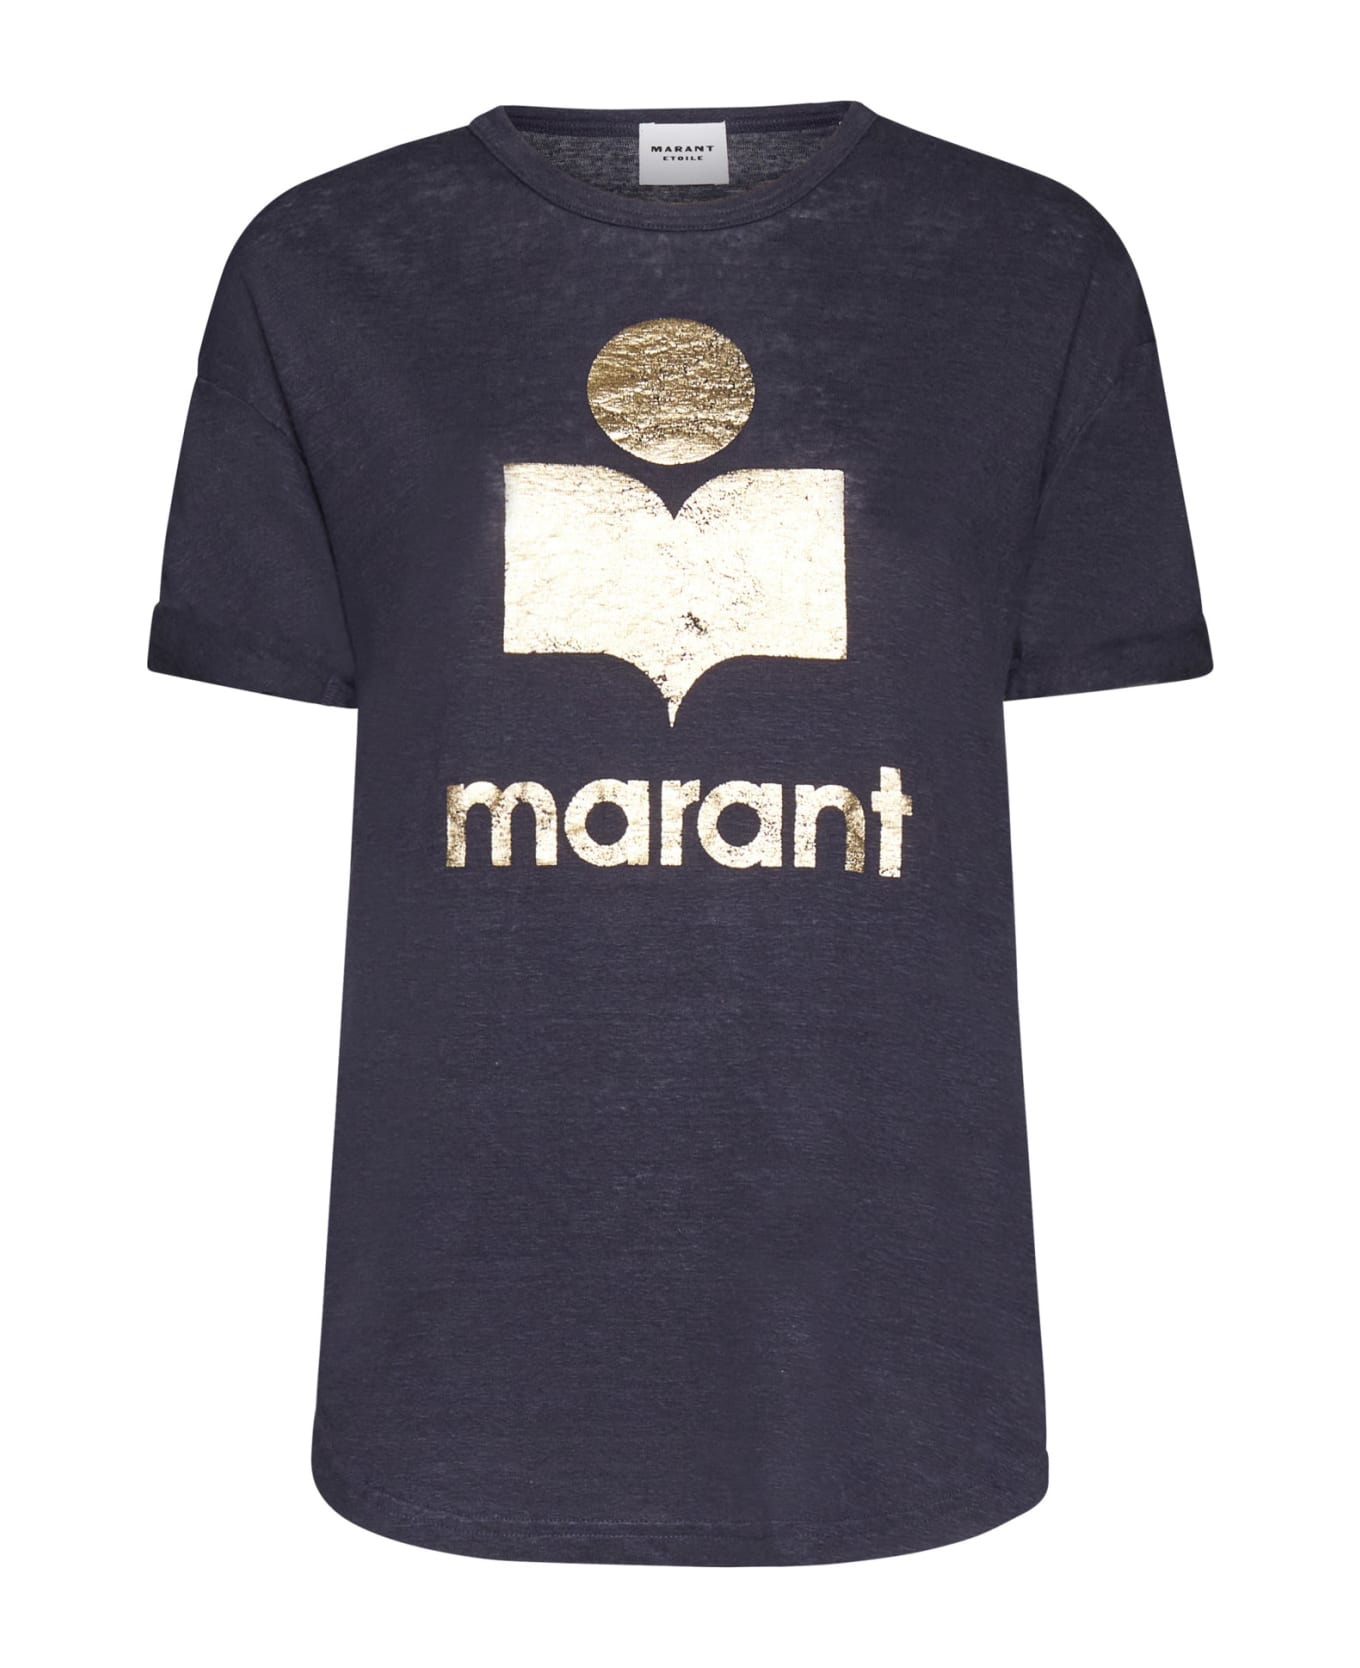 Marant Étoile Koldi T-shirt - Faded night/gold